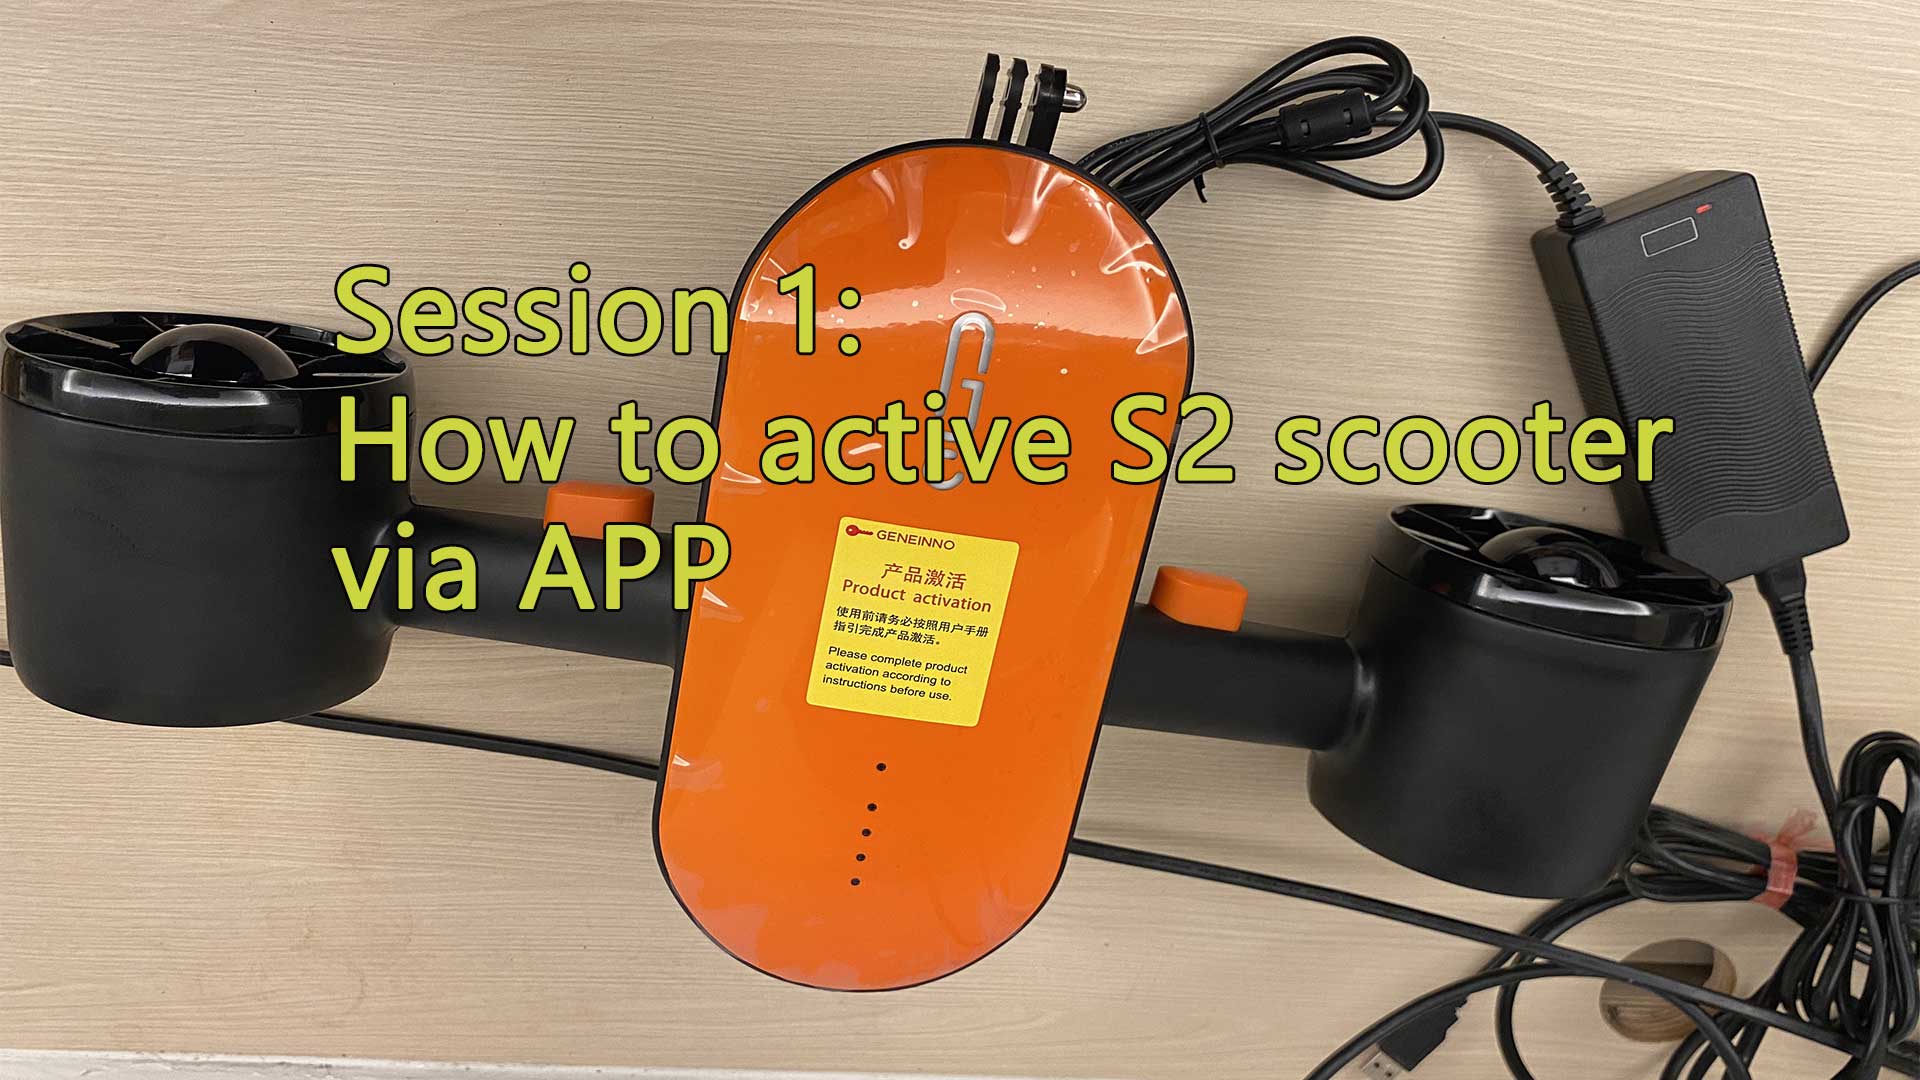 How to active Geneinno S2 underwater scooter?